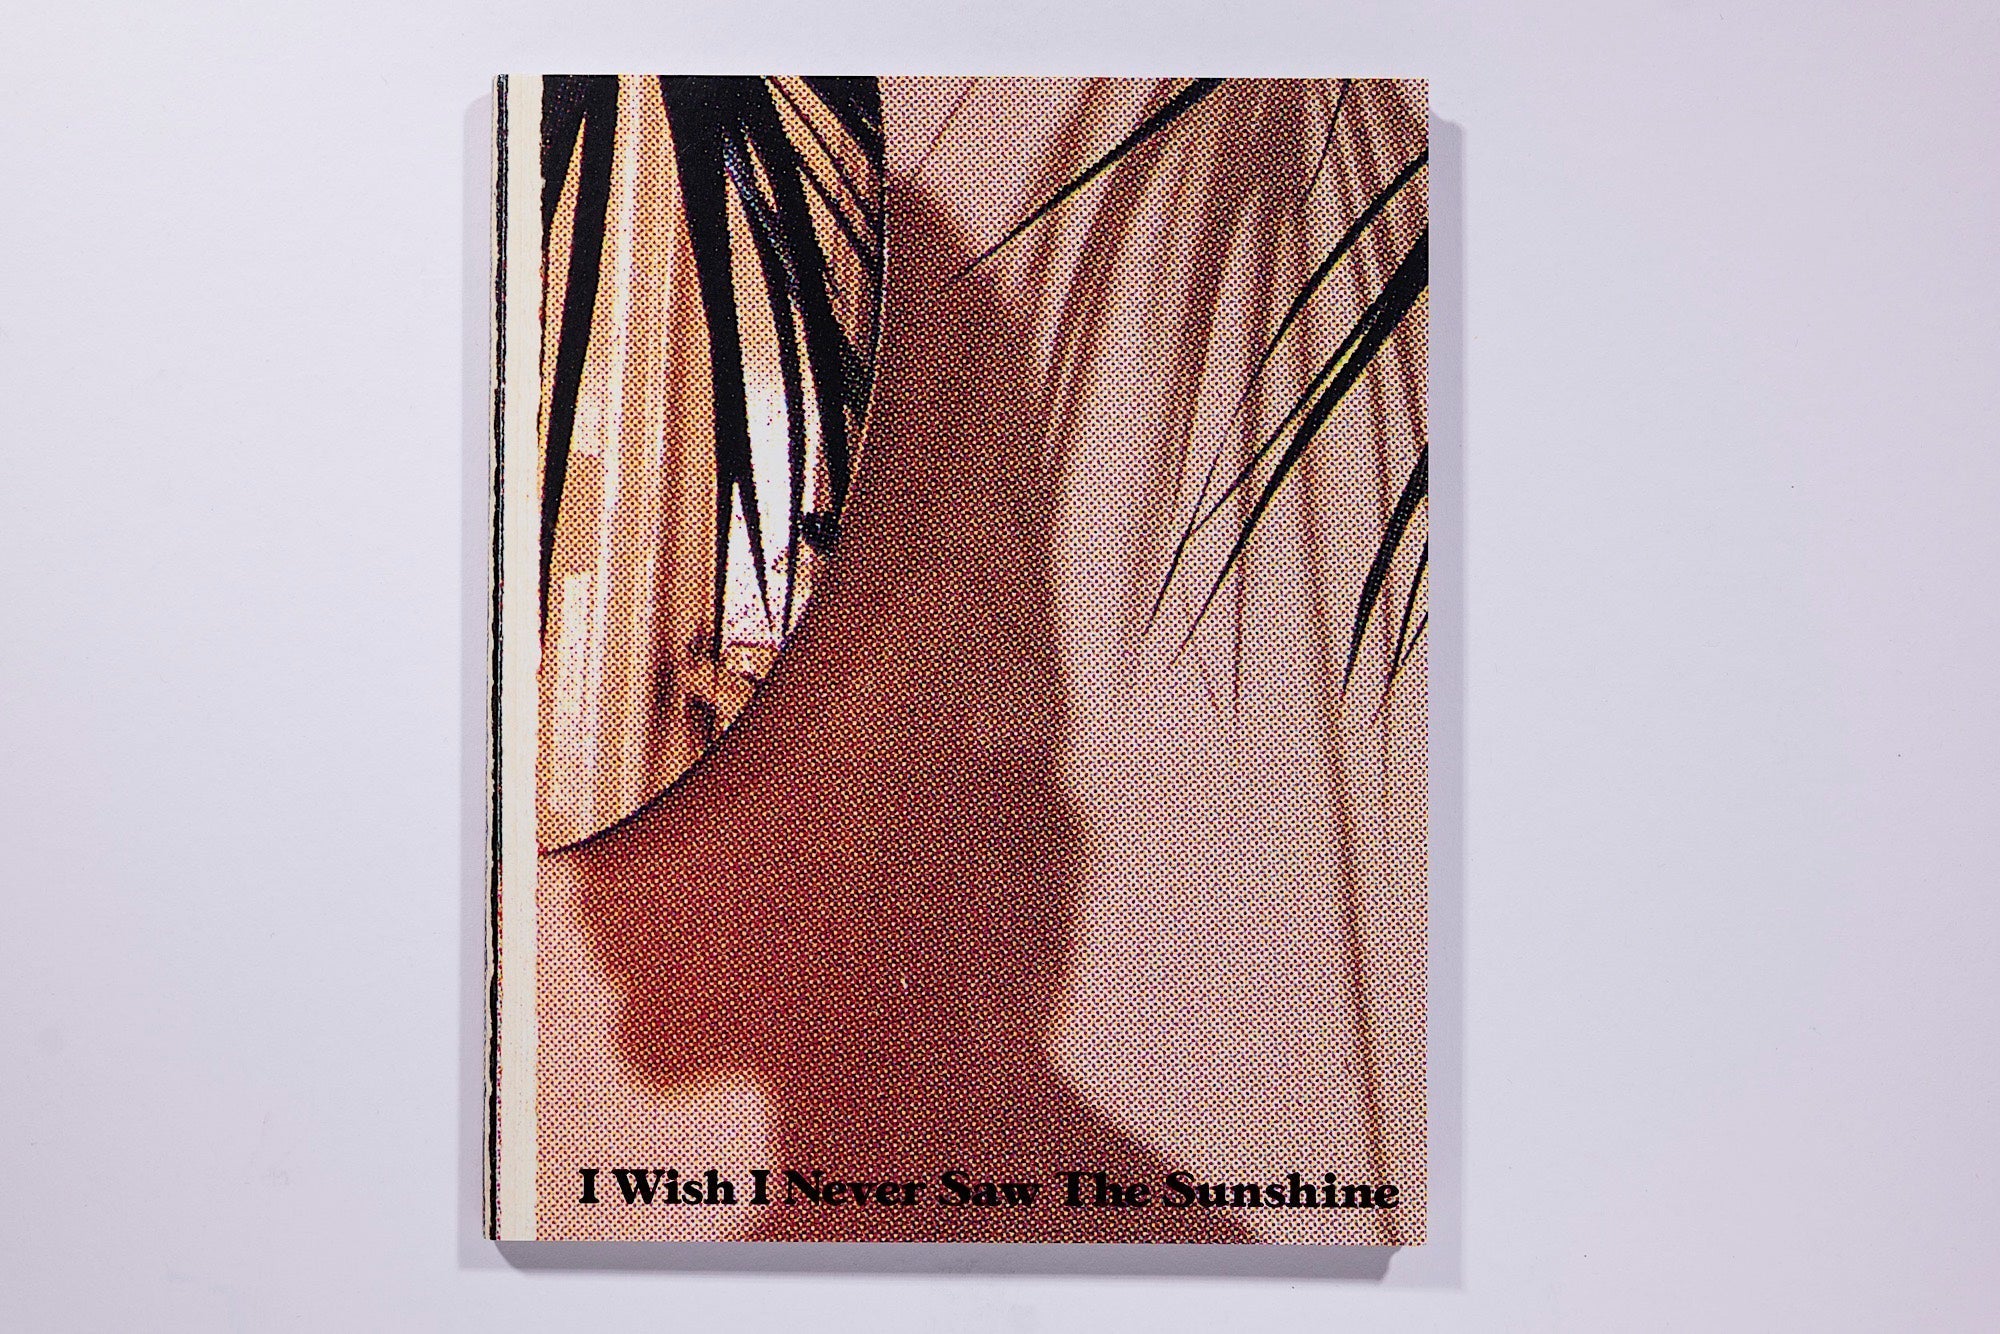 Pacifico Solano - I Wish I Never Saw the Sunshine